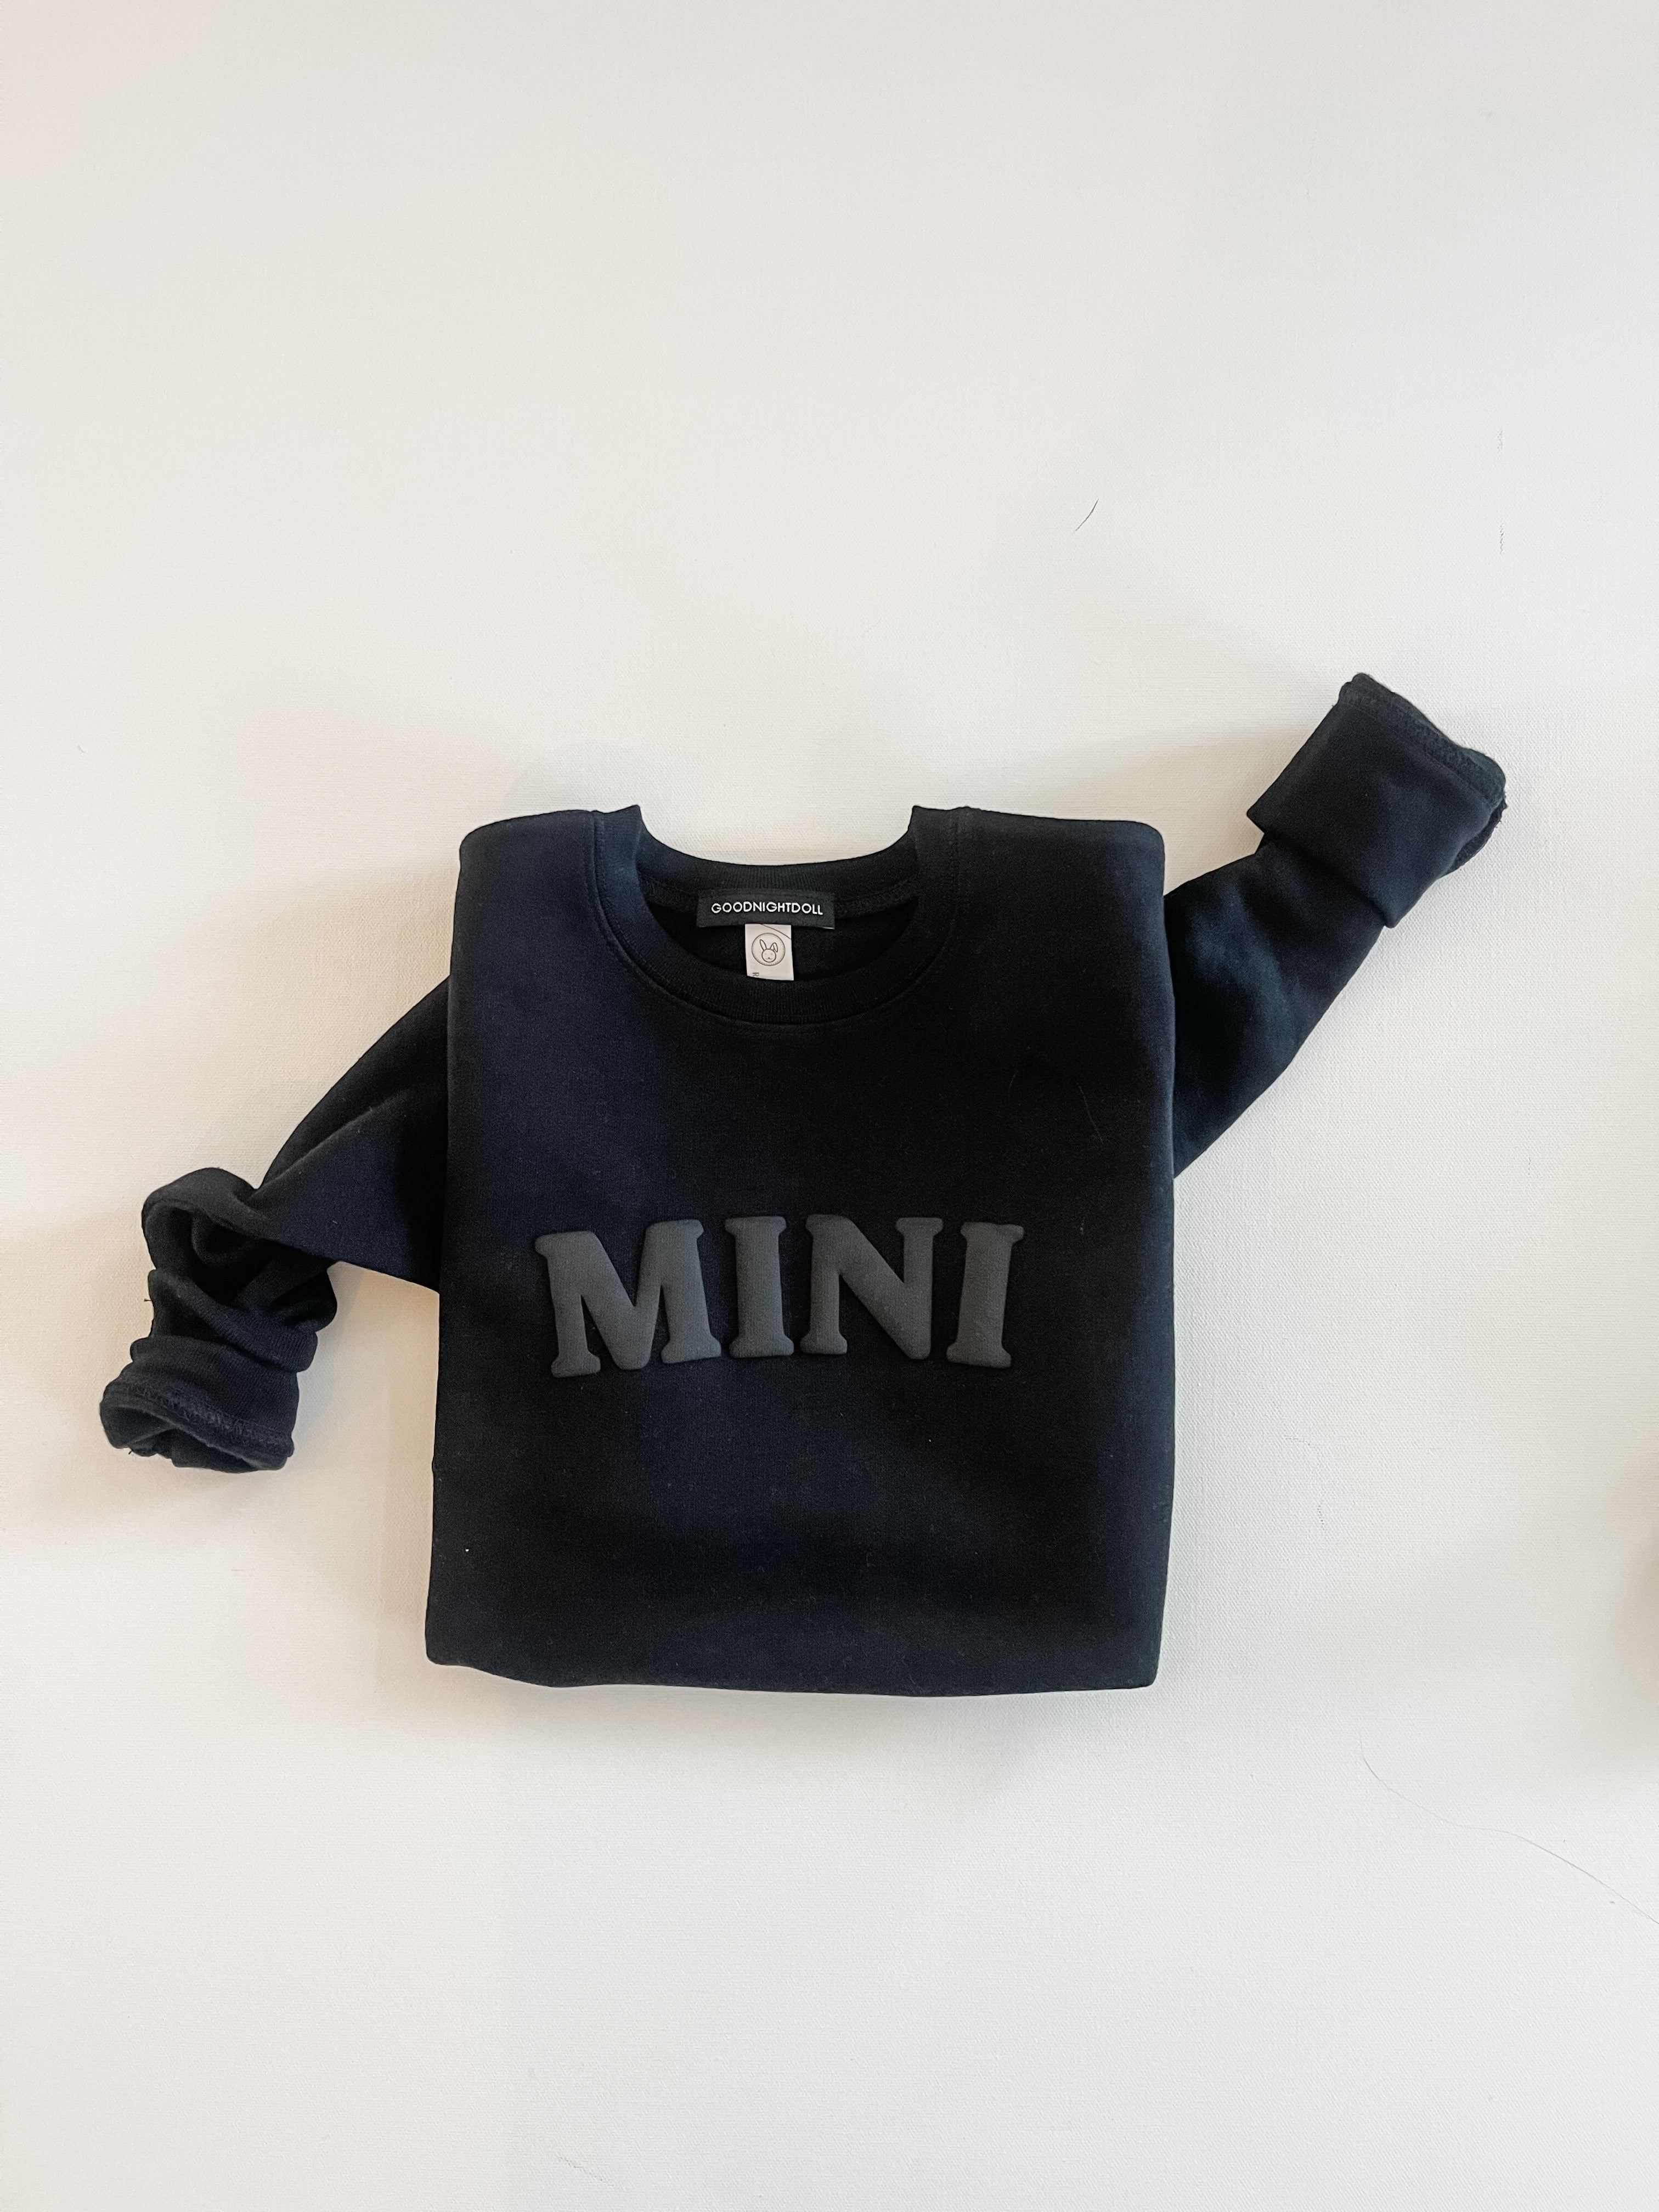 Mini crewneck sweatshirt |black